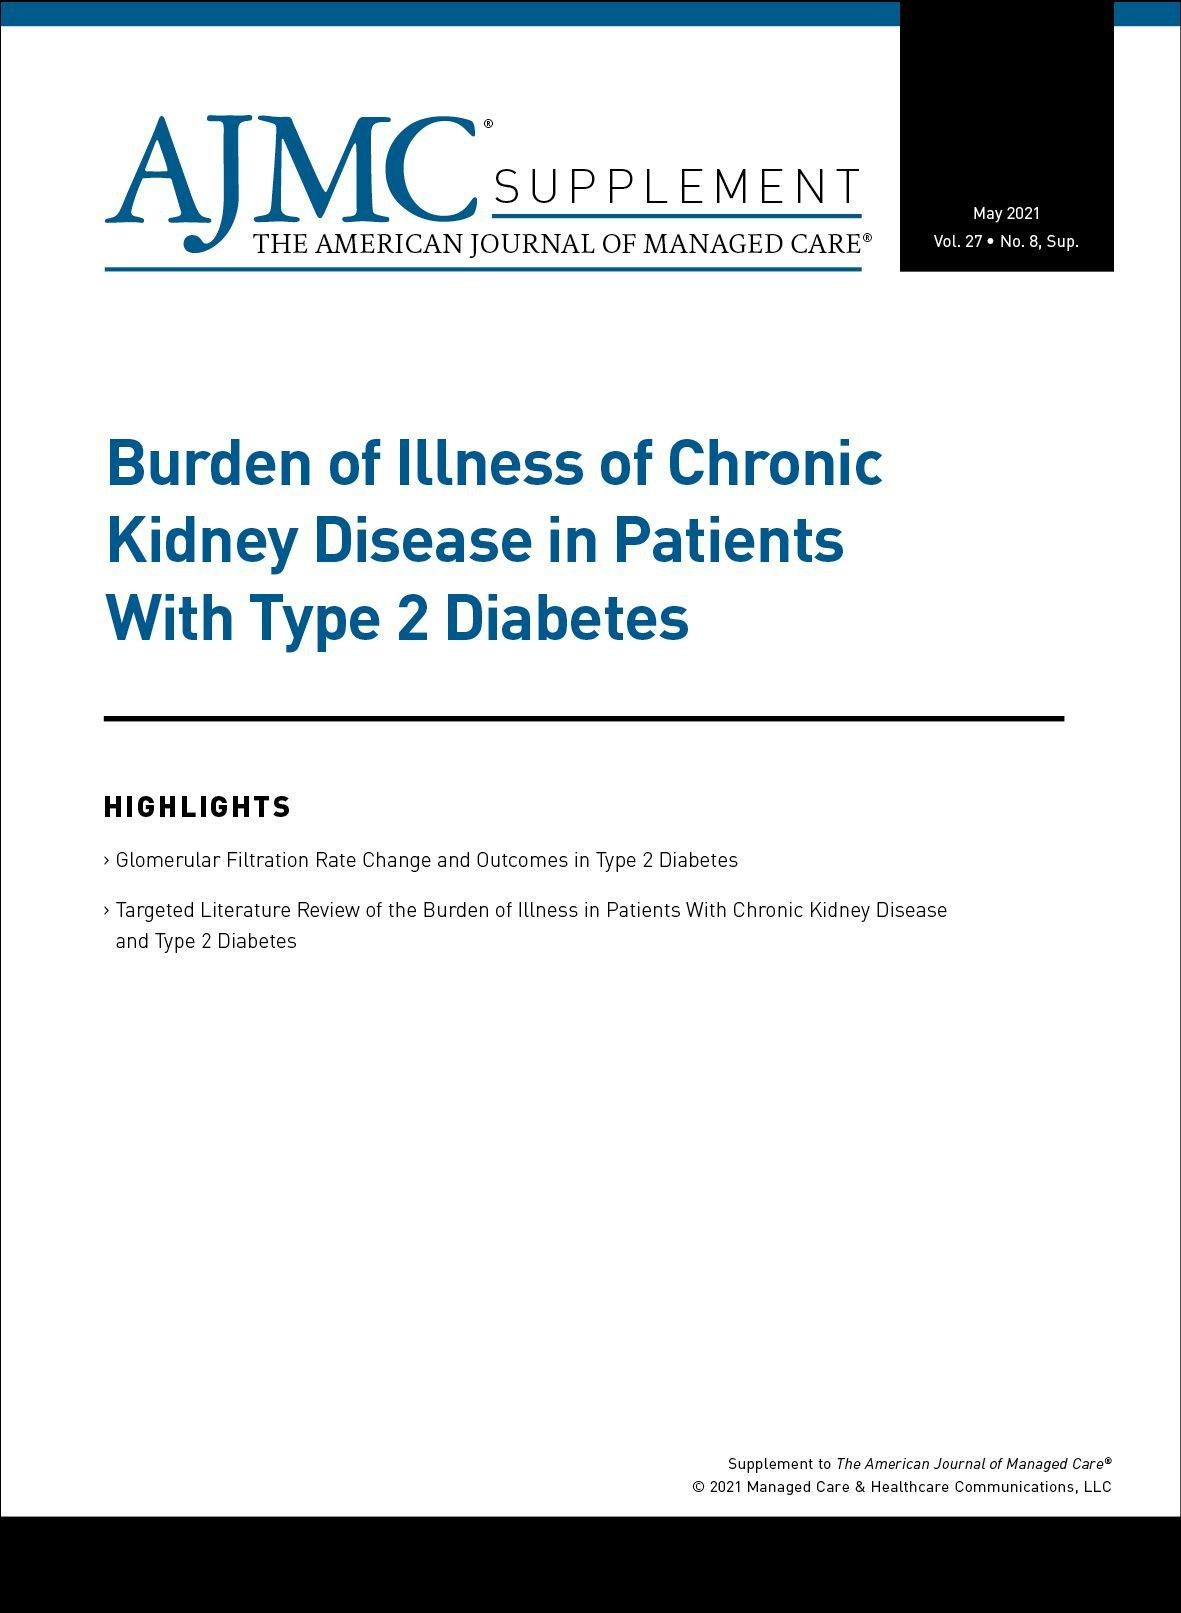 Burden of Illness of Chronic Kidney Disease in Patients With Type 2 Diabetes